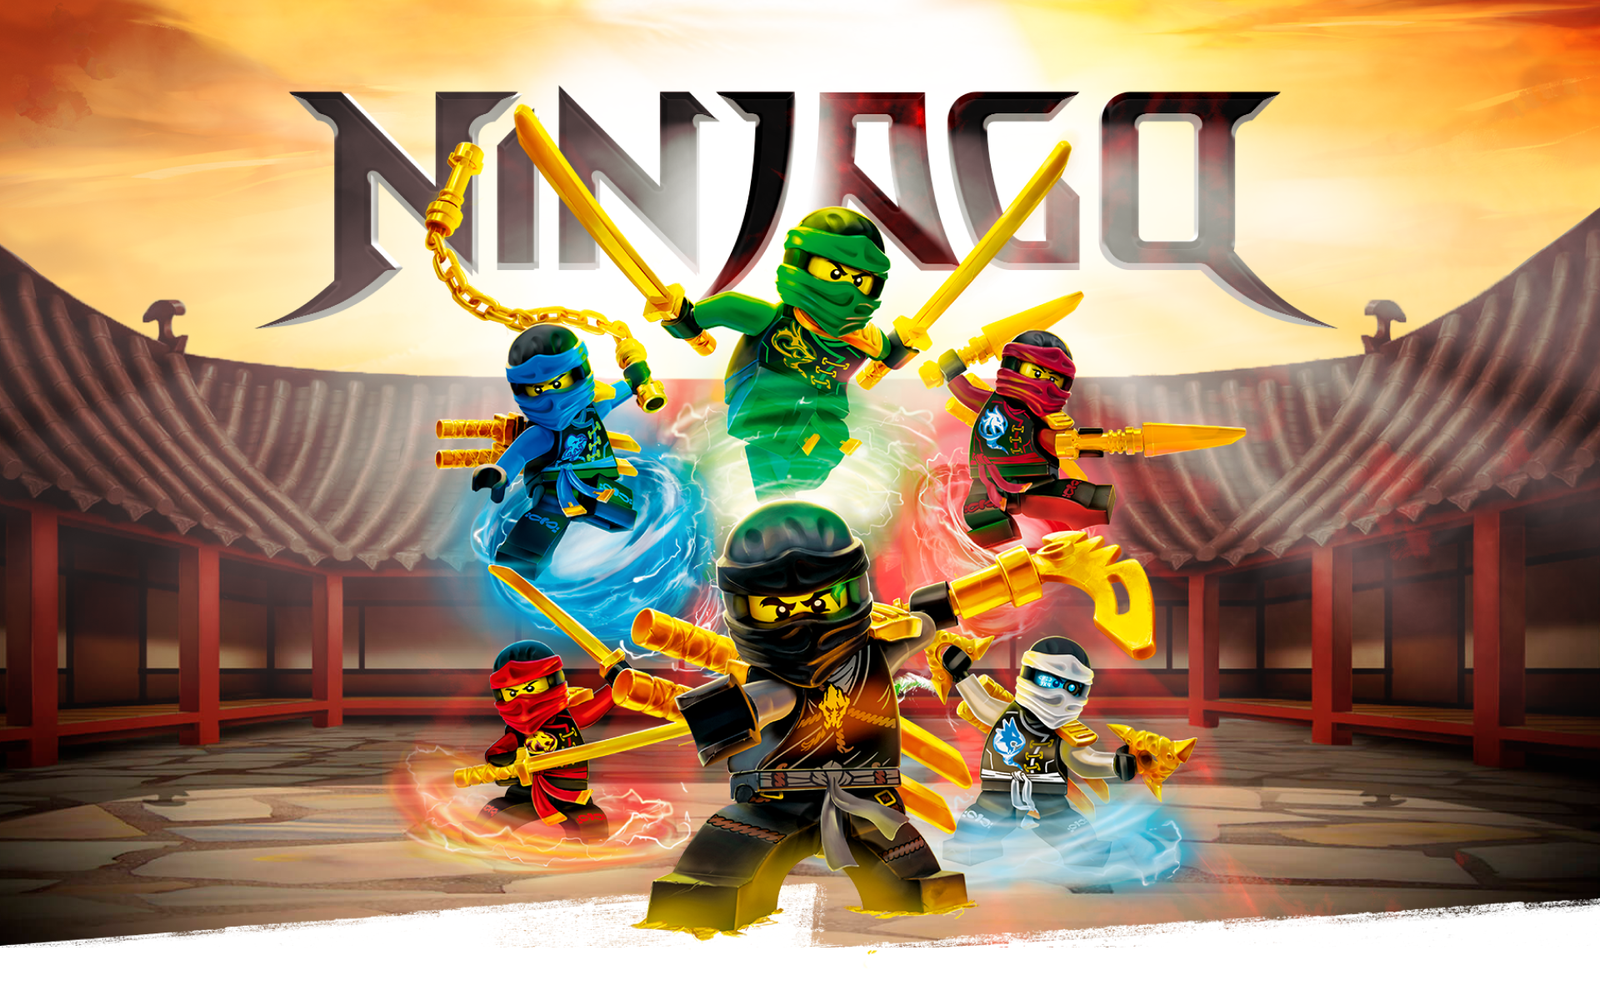 Ninja Hands - Play for free - Online Games